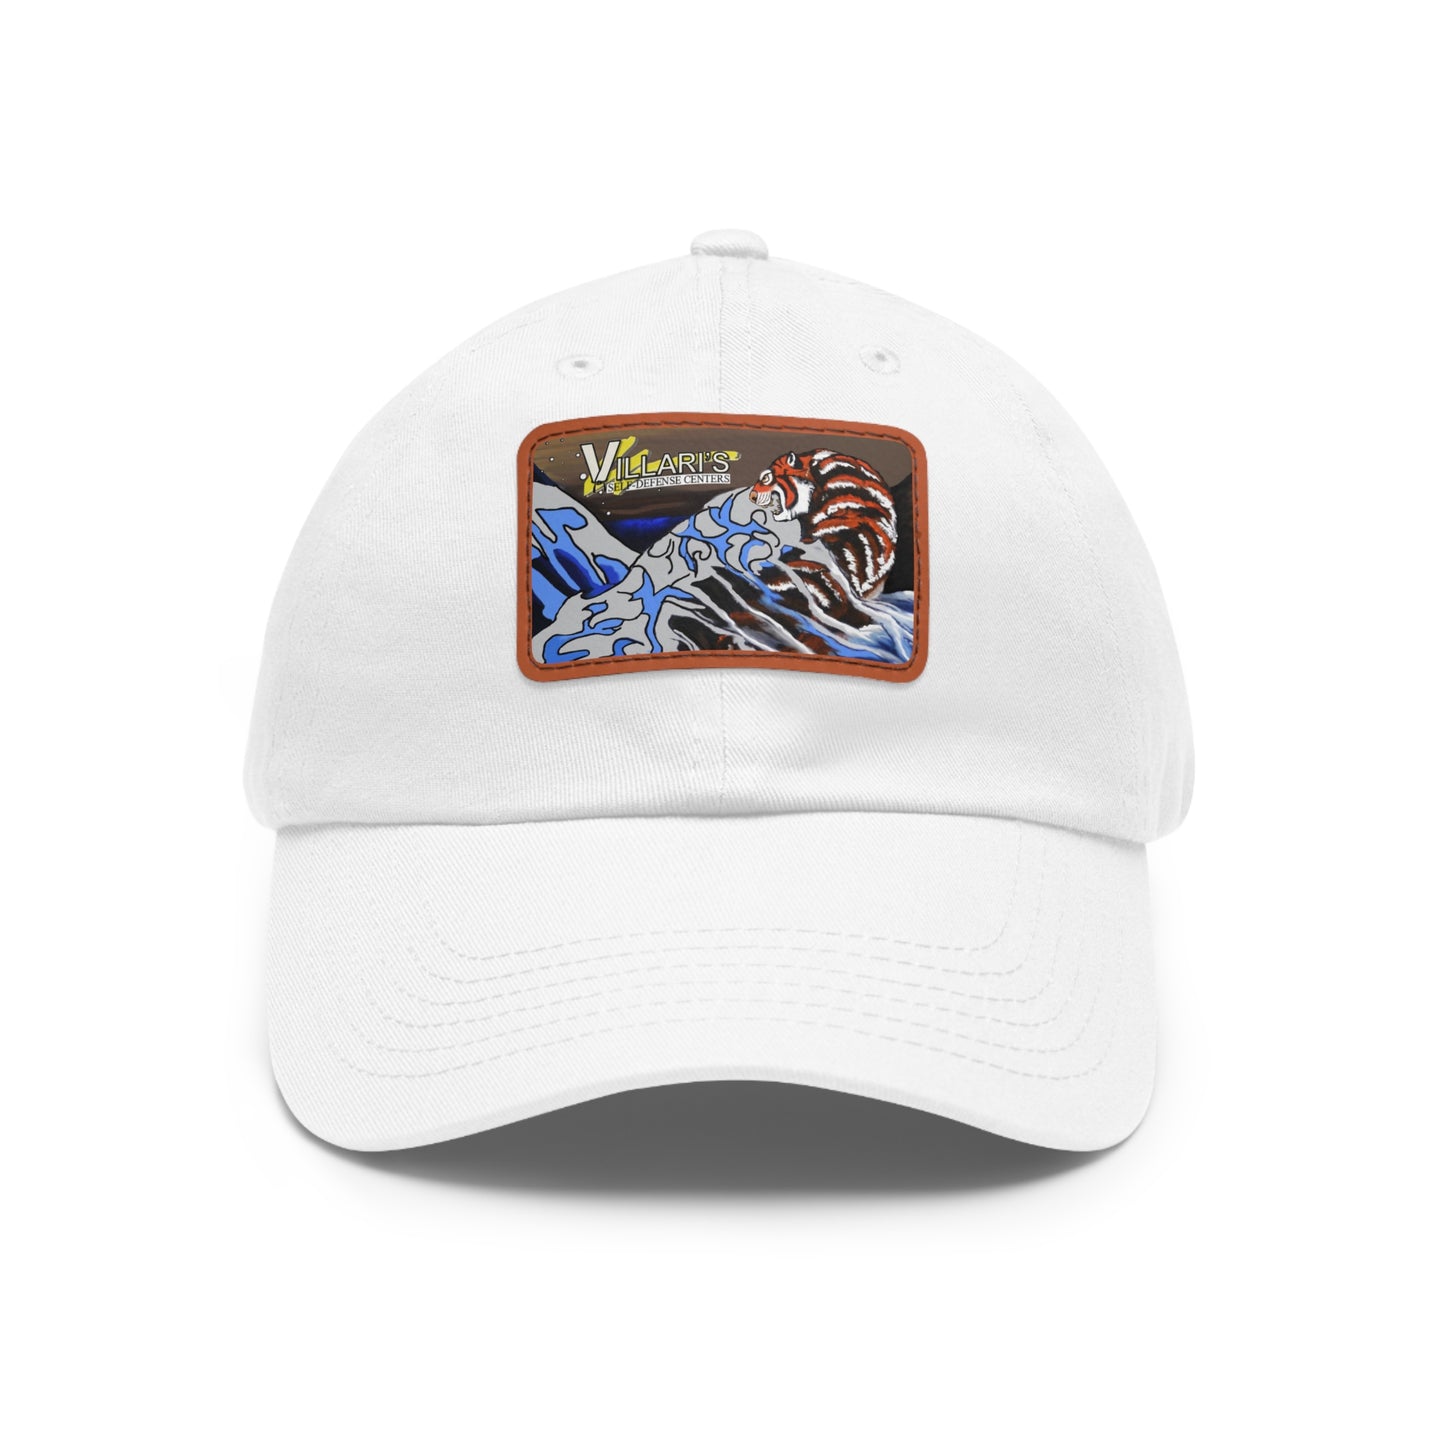 Tiger Baseball Hat